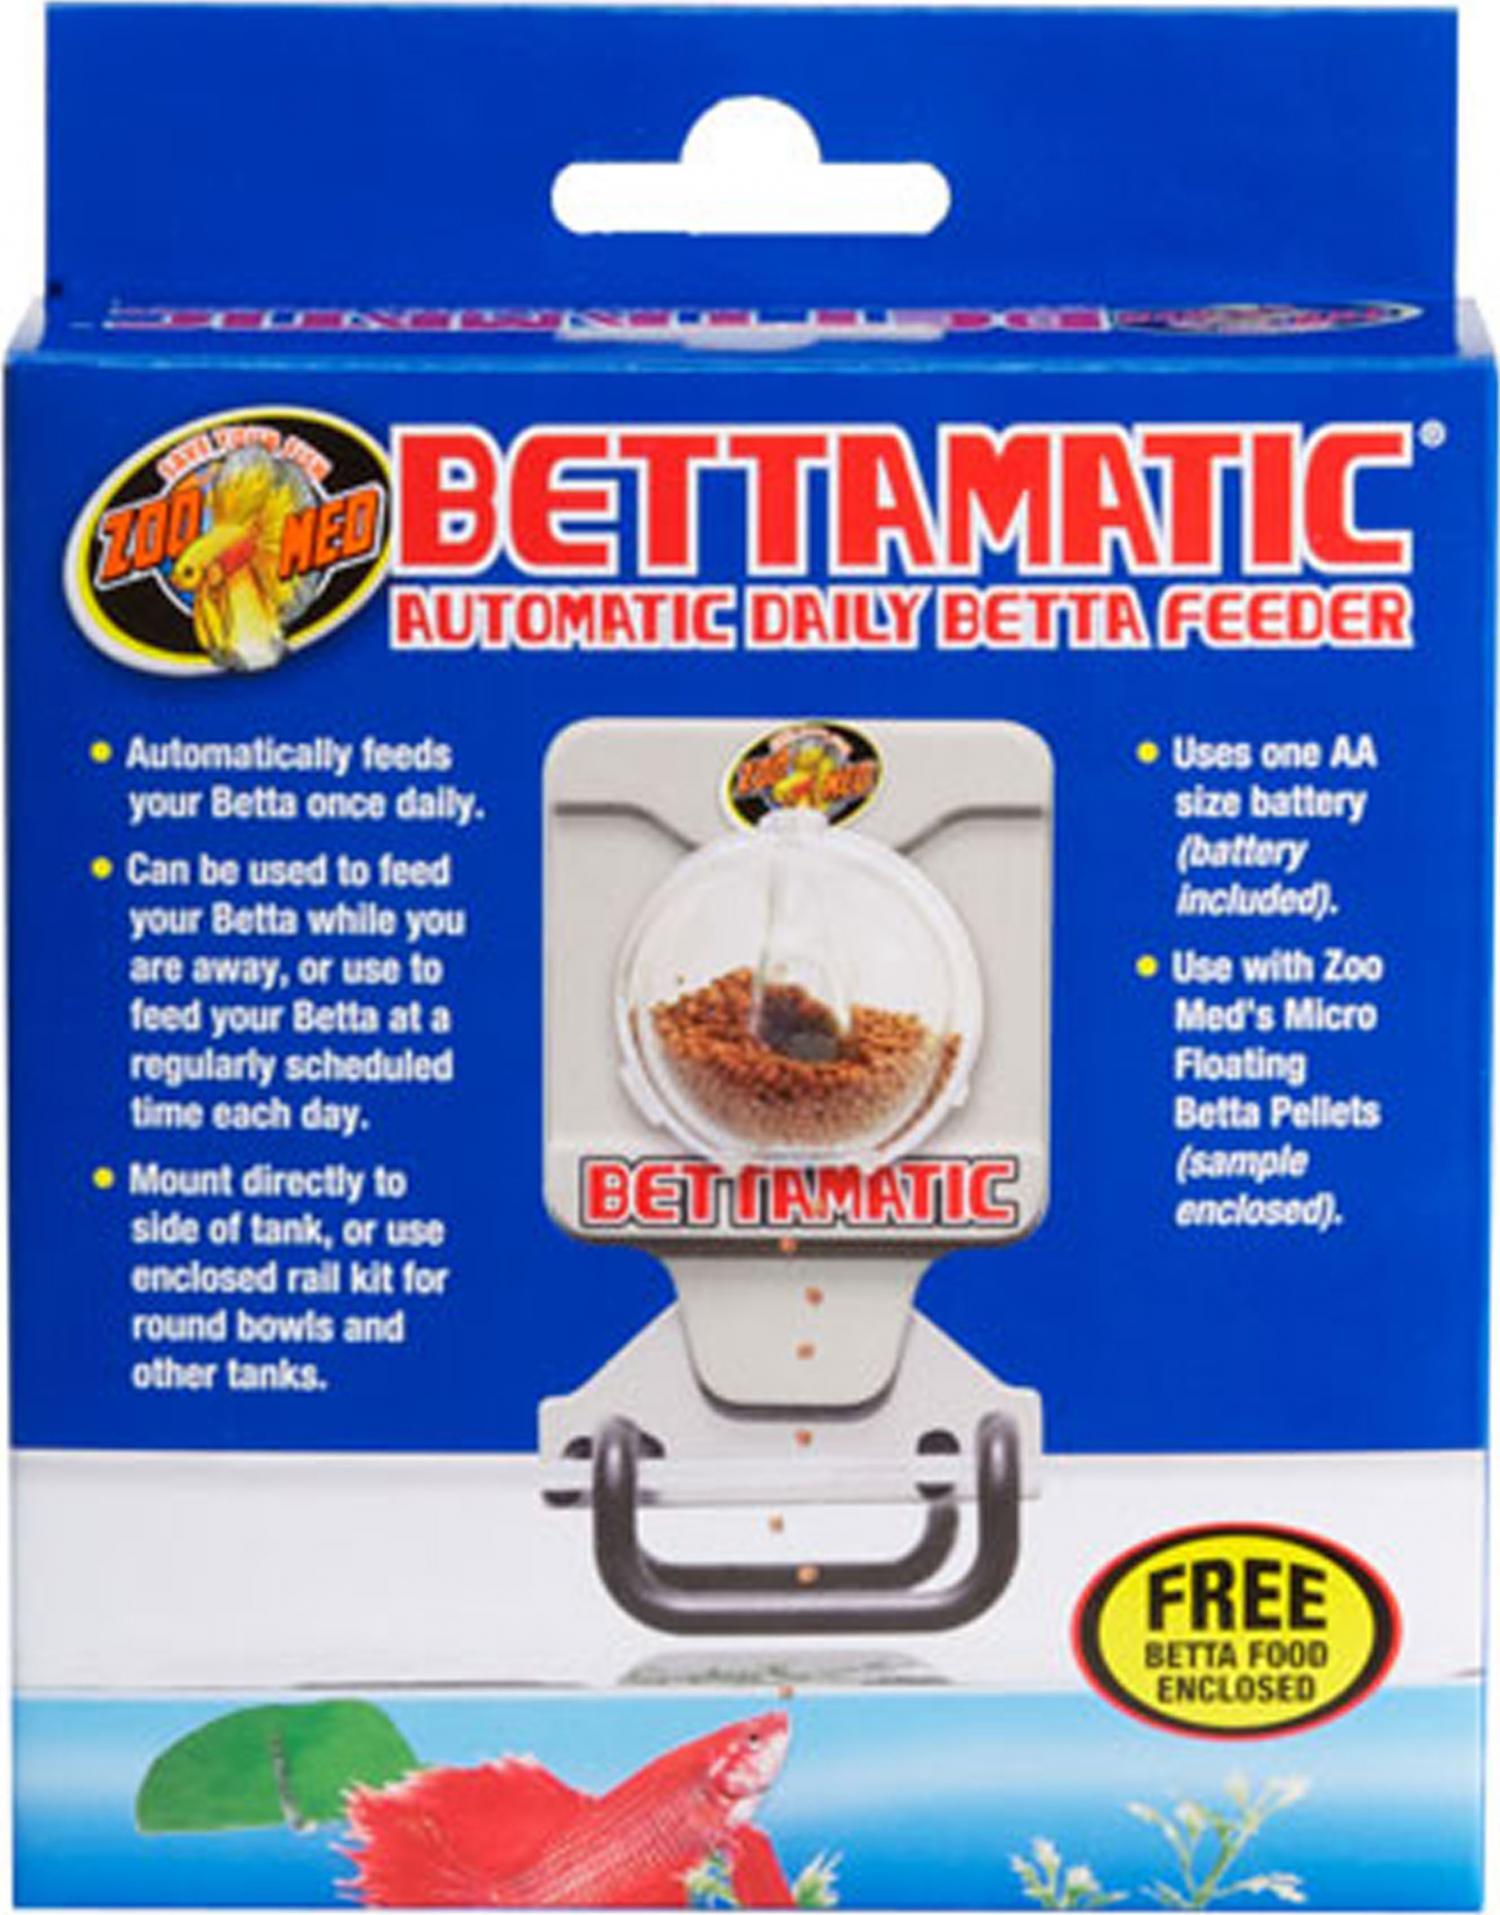 Bettamatic Automatic Daily Betta Feeder